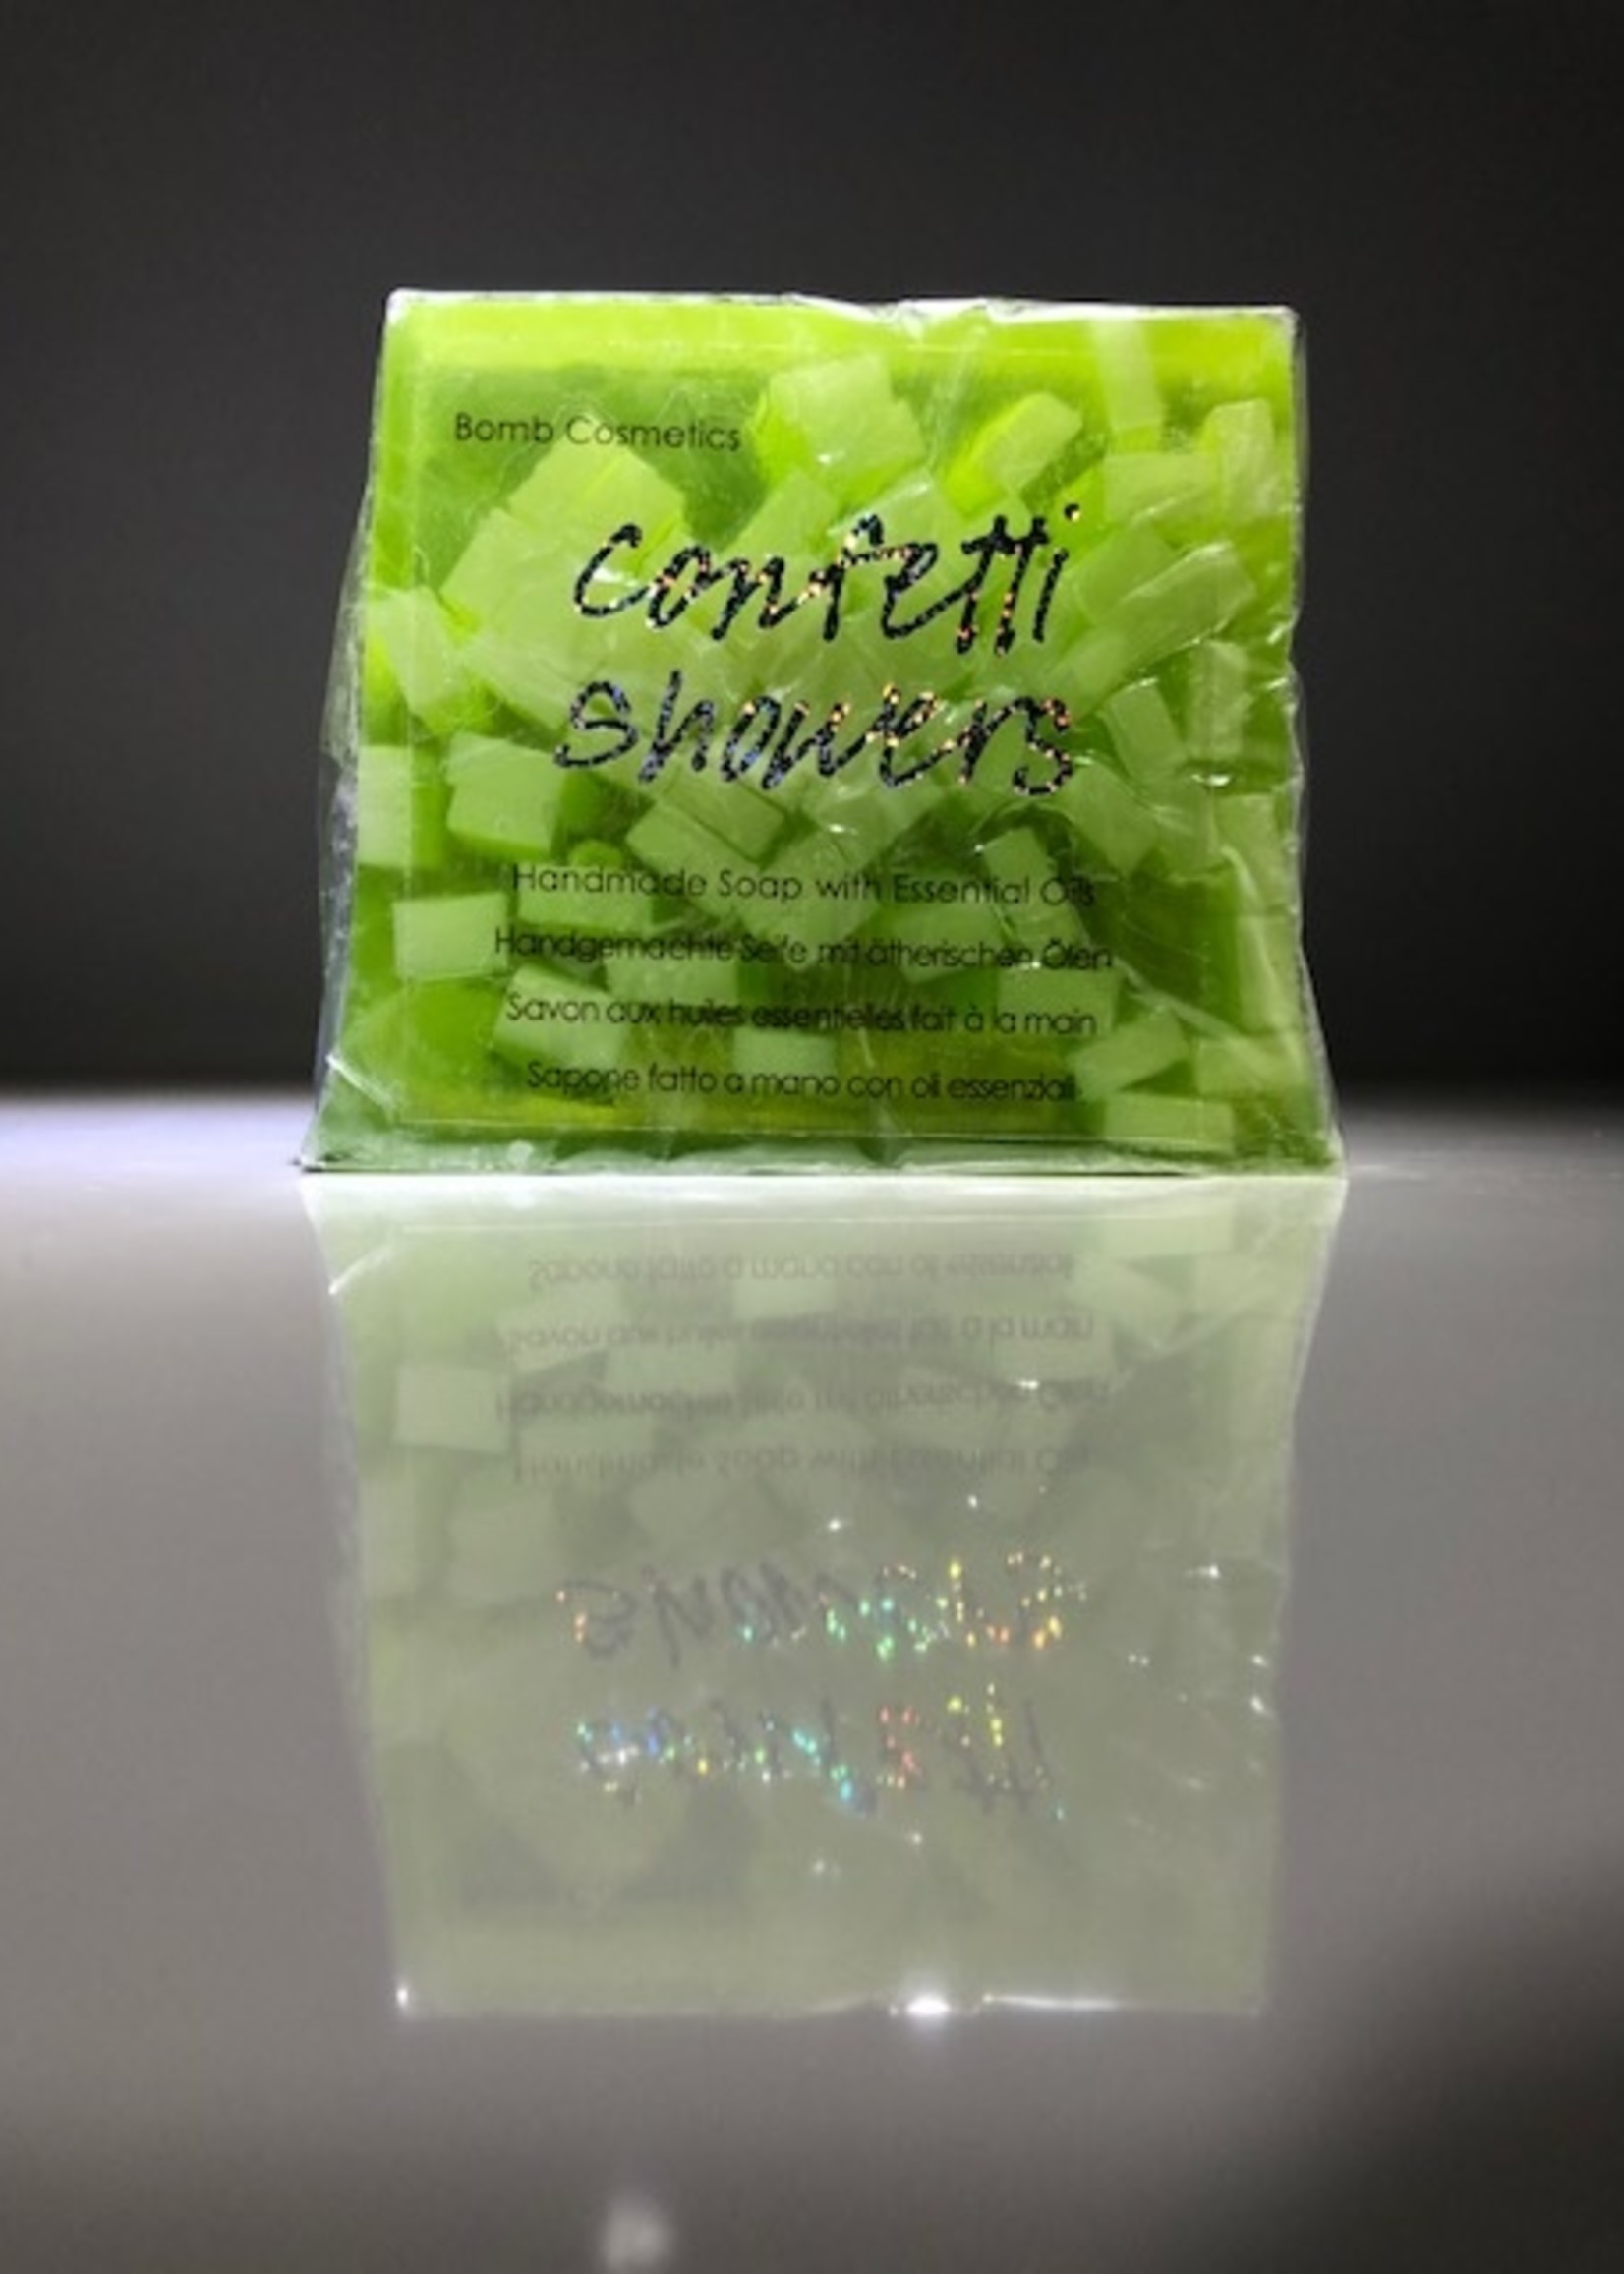 Bomb Cosmetics Confetti Shower Sliced Soap Vegan